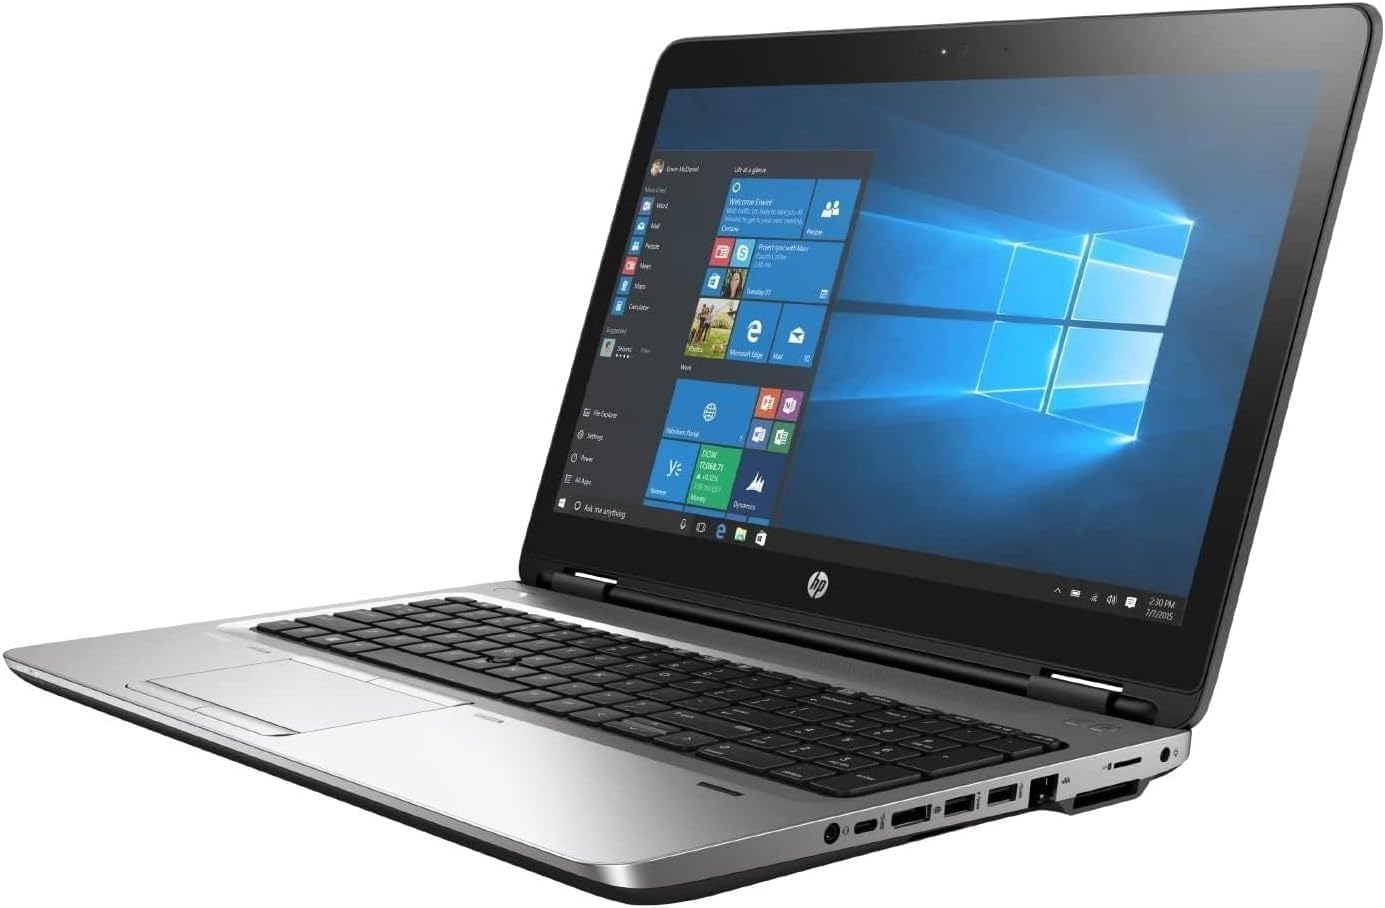 HP ProBook 650 G3 - Laptop empresarial, Intel Core i5-7300U 2.5GHz hasta 3.1GHz, 16GB RAM, 512GB SSD, teclado retroiluminado, huella digital, CAM, 15.6 pulgadas HD, Windows 10 Pro 64Bit